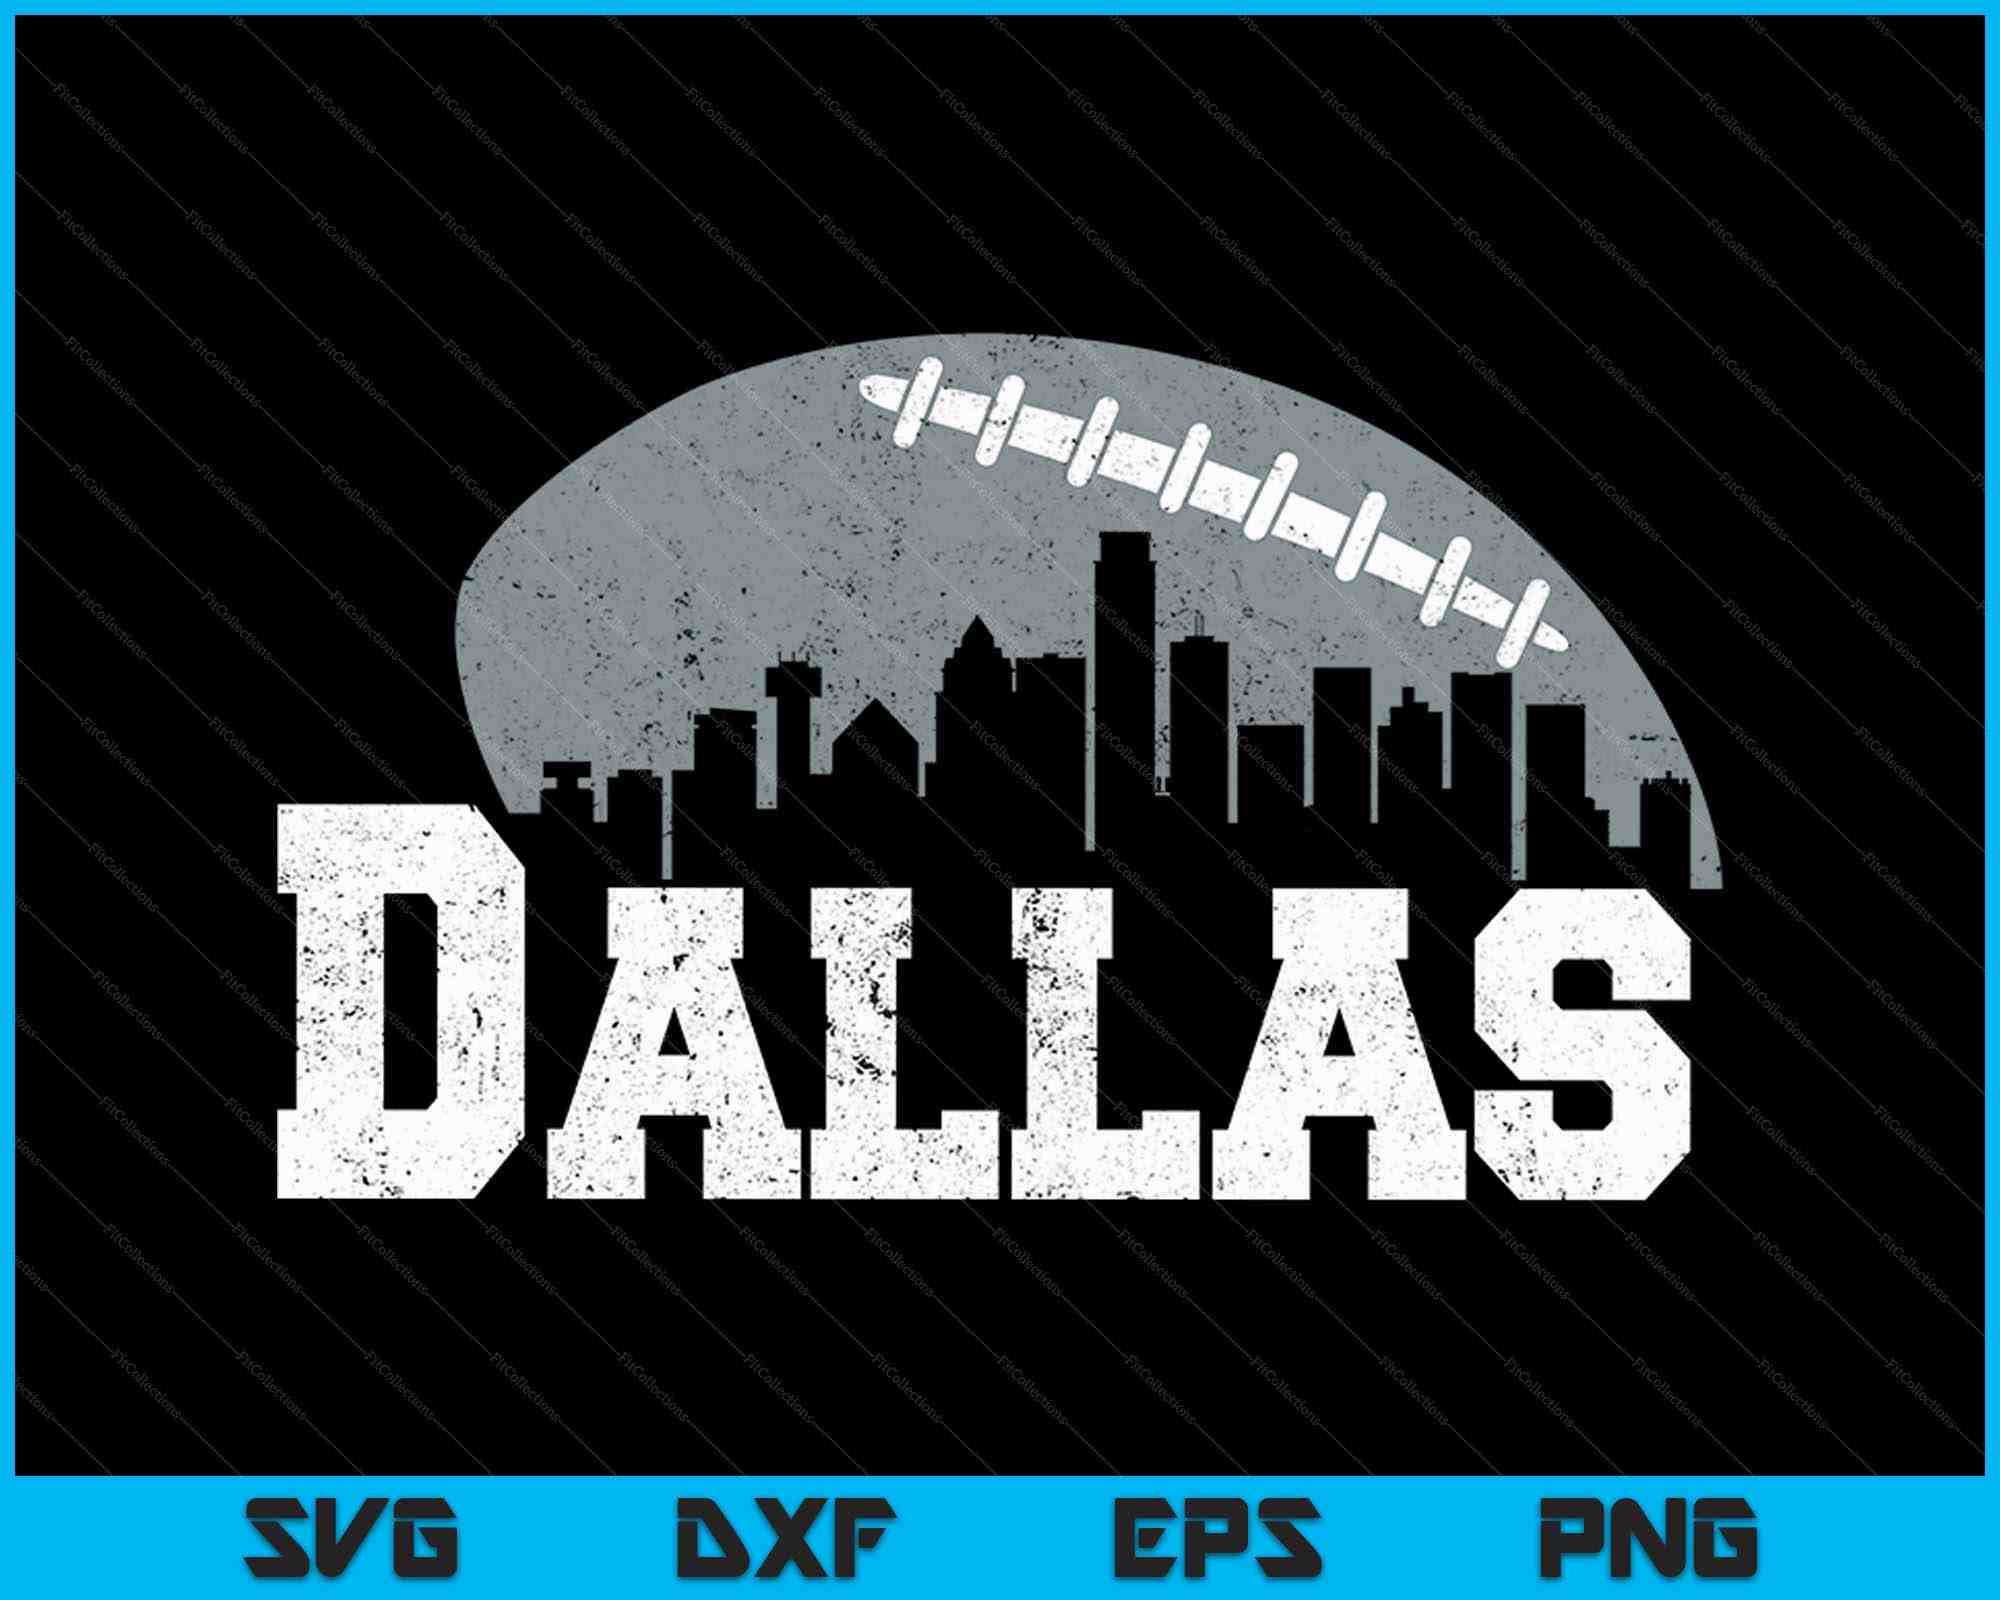 Dallas cowboys SVG File or DXF File Make a Decal or Tshirt – creativeusarts